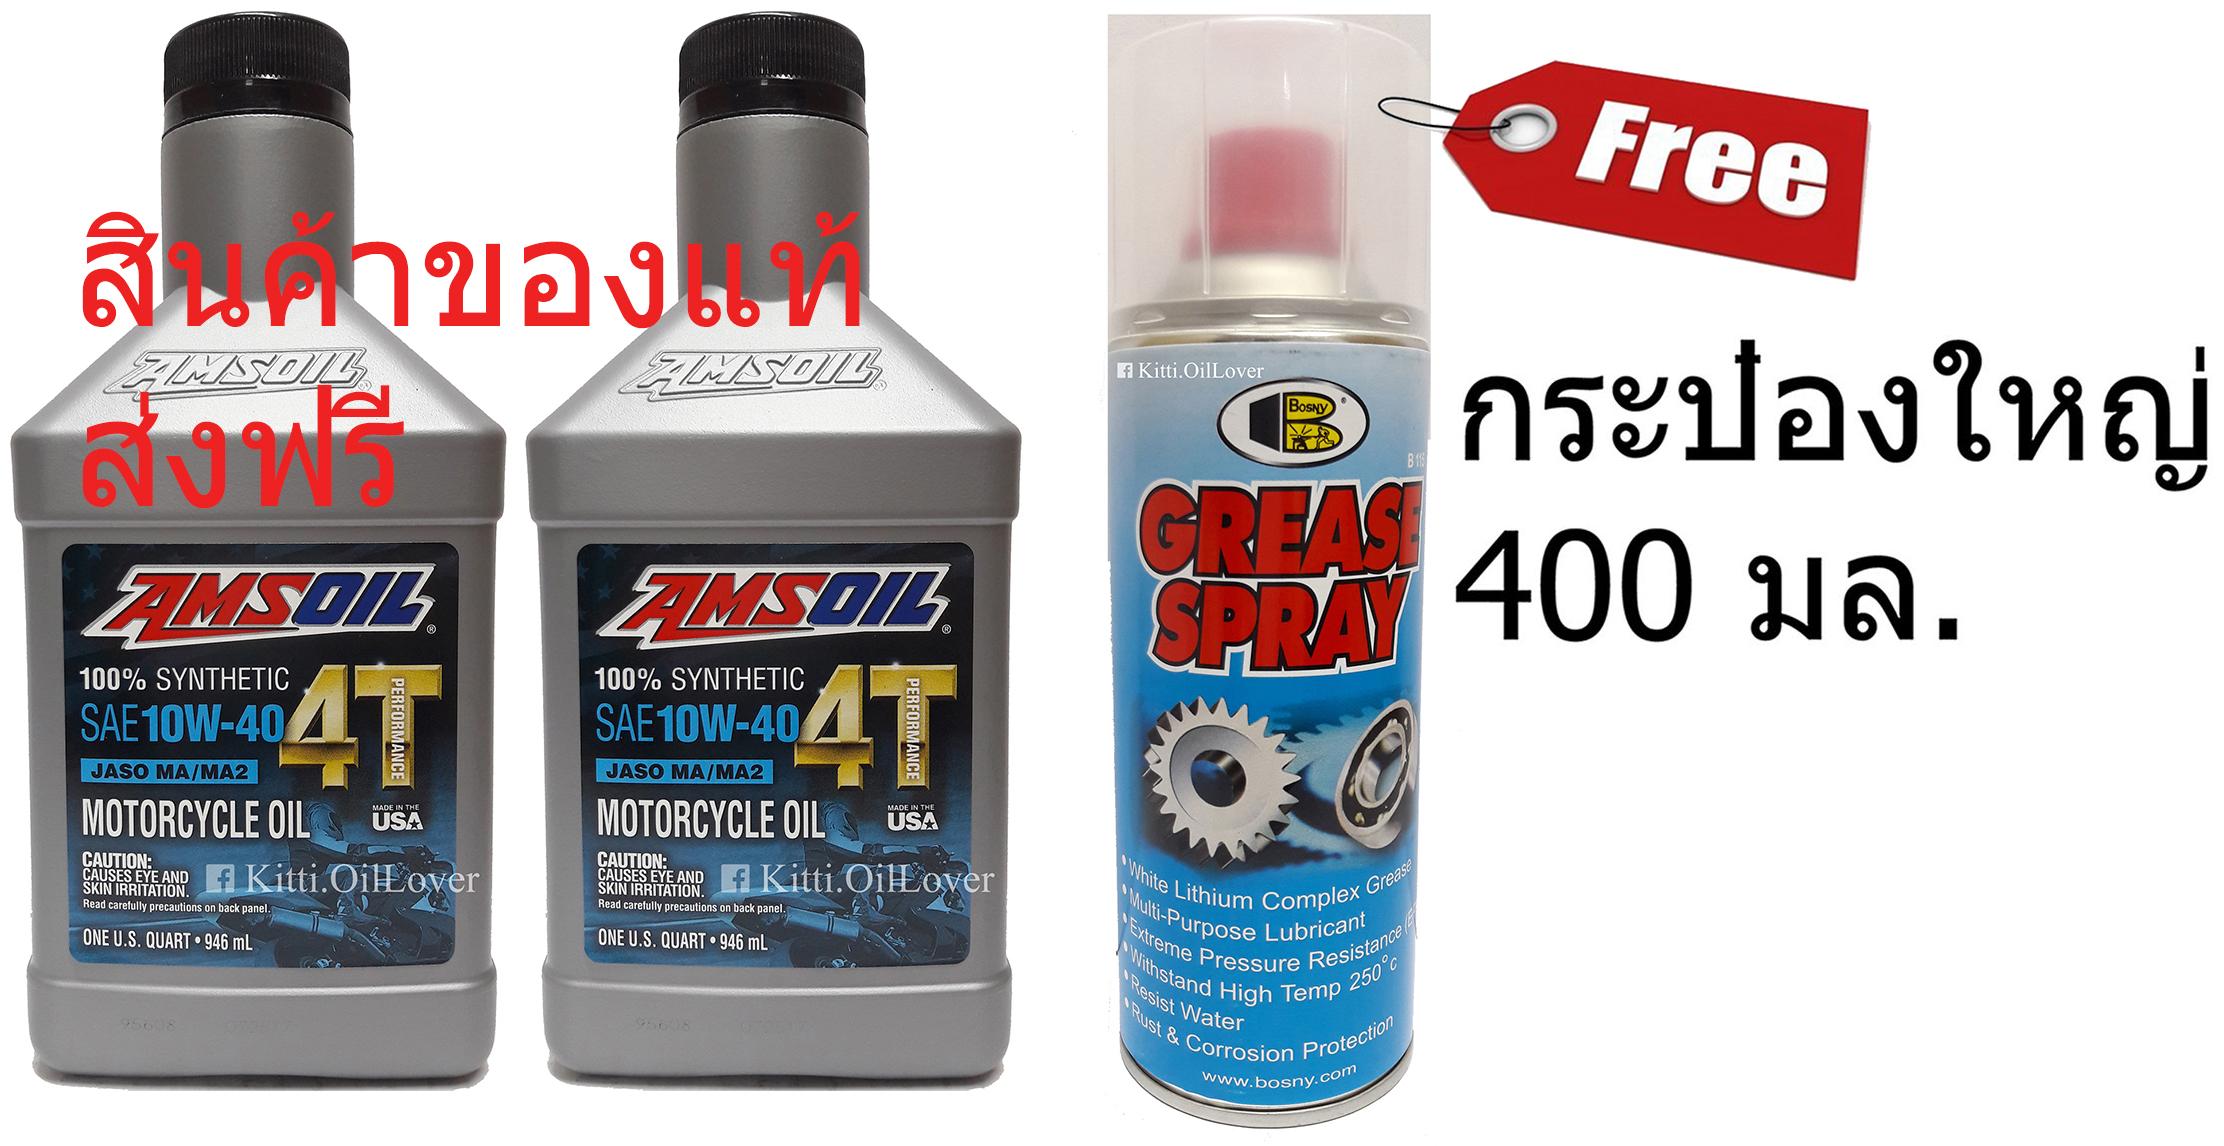 Amsoil 100% Synthetic SAE 10W-40 4T Performance Motorcycle Oil น้ำมันเครื่องสังเคราะห์ สูตร 4 จังหวะ สำหรับมอเตอร์ไซค์ JASO MA/MA2 Made in USA (946 ml x 2) + Free Bosny Grease Spray บอสนี่ สเปรย์จารบีขาว (400 มล.)